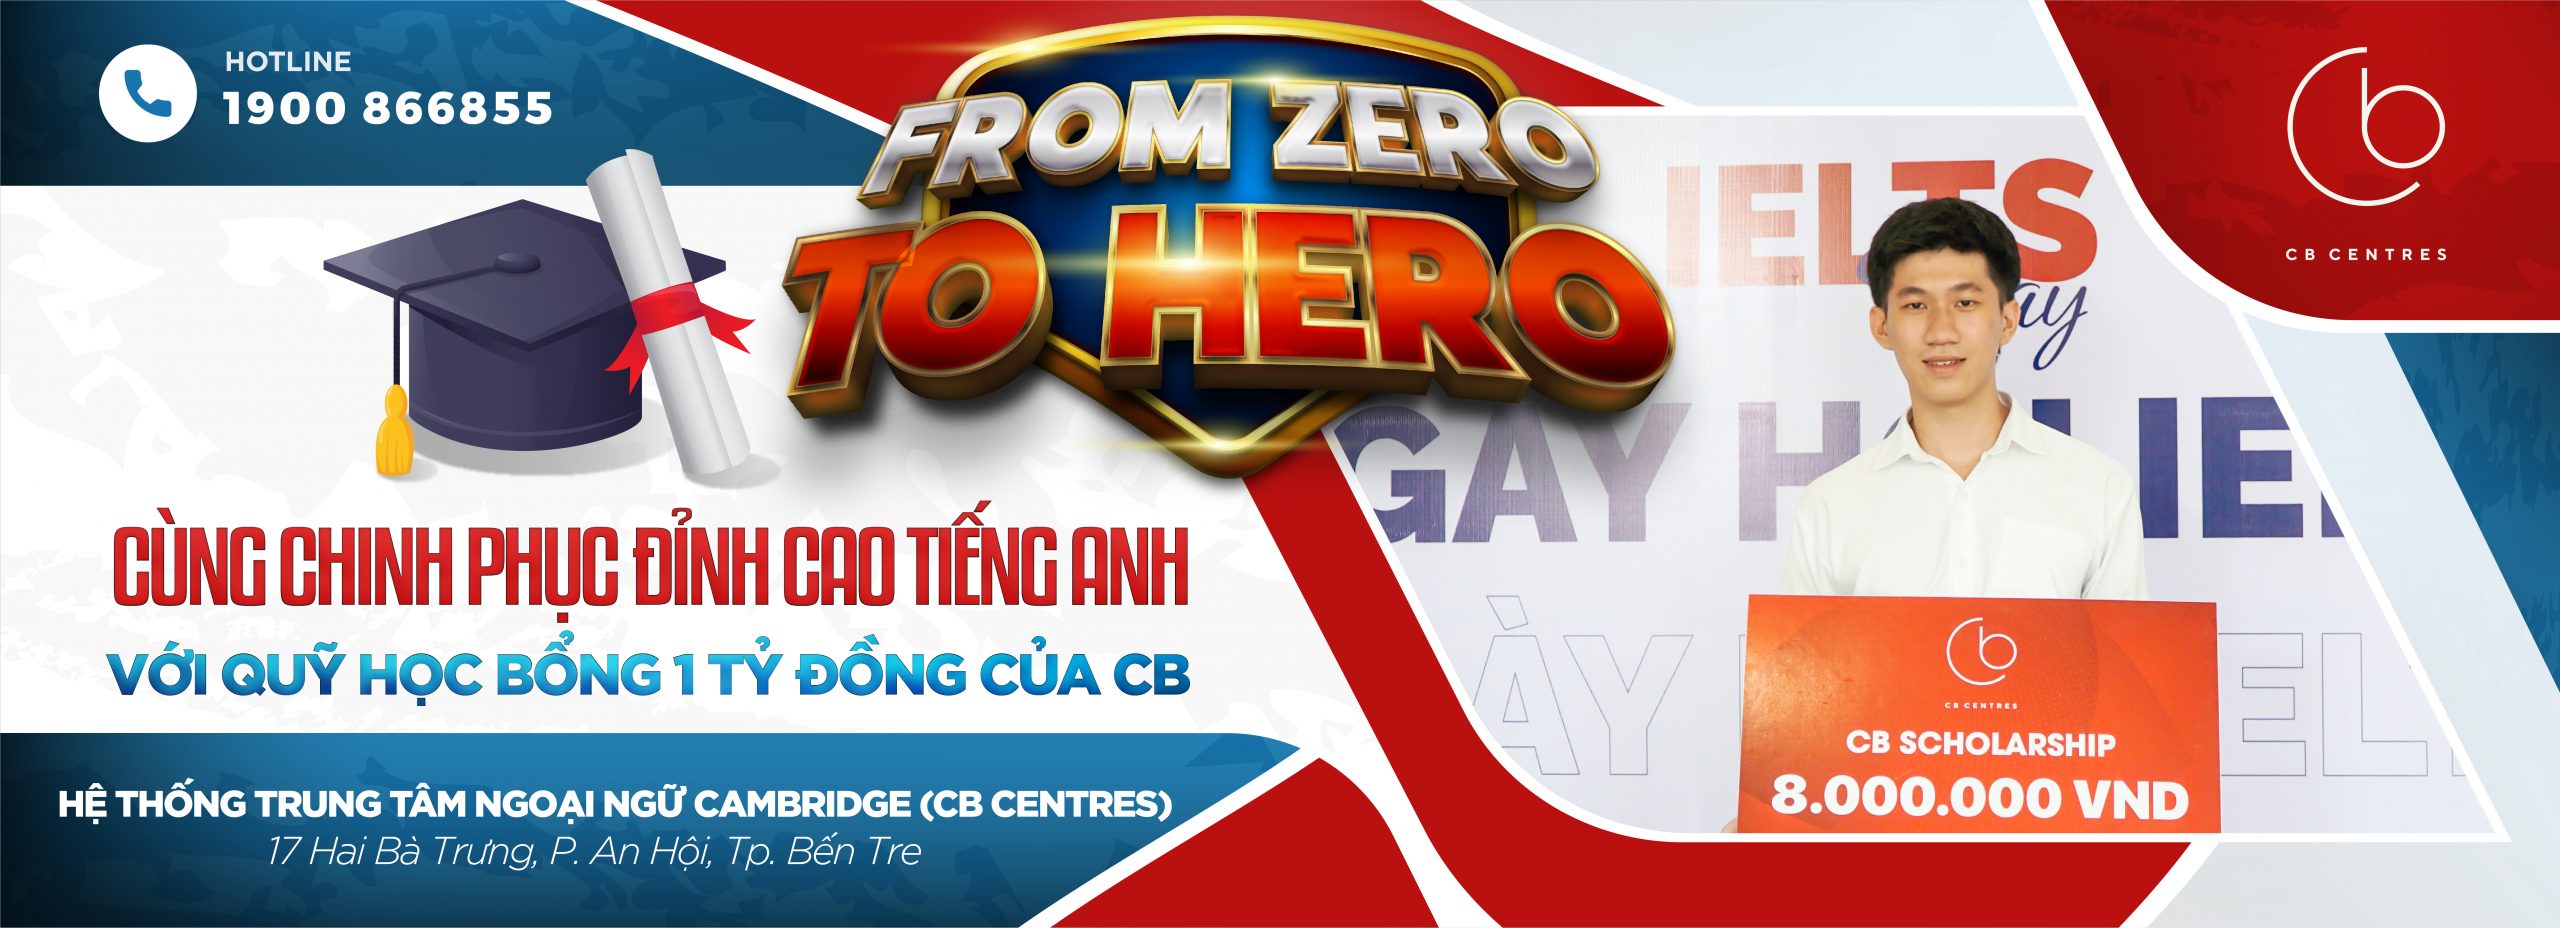 cover web - FROM ZERO TO HERO-02